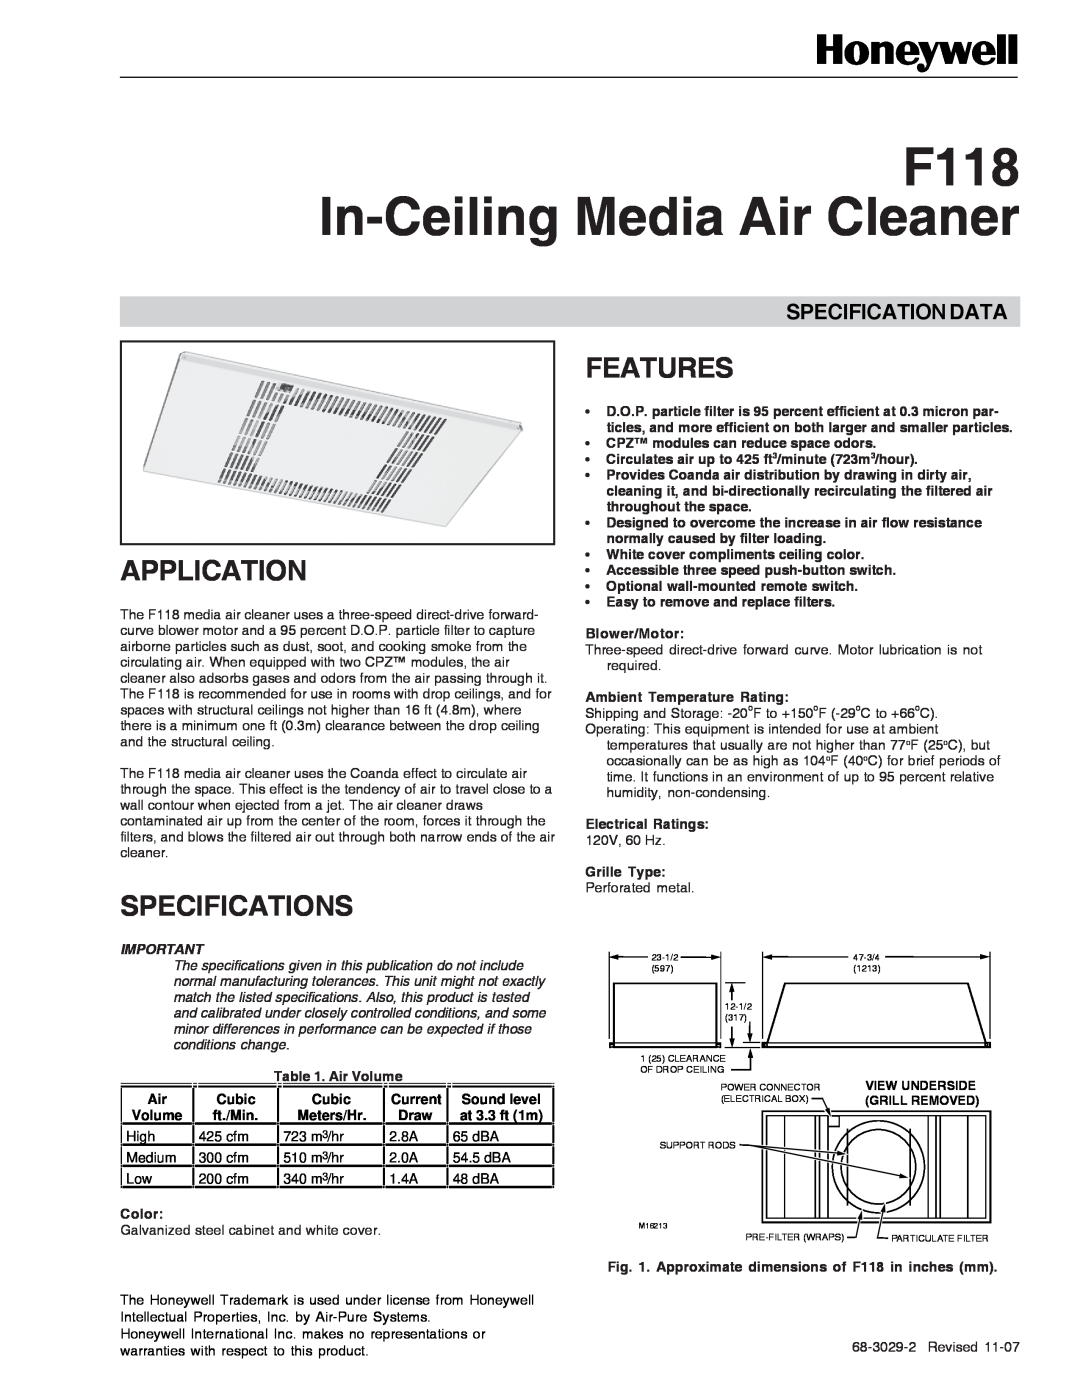 Honeywell specifications F118 In-CeilingMedia Air Cleaner, Application, Specifications, Features, Specification Data 